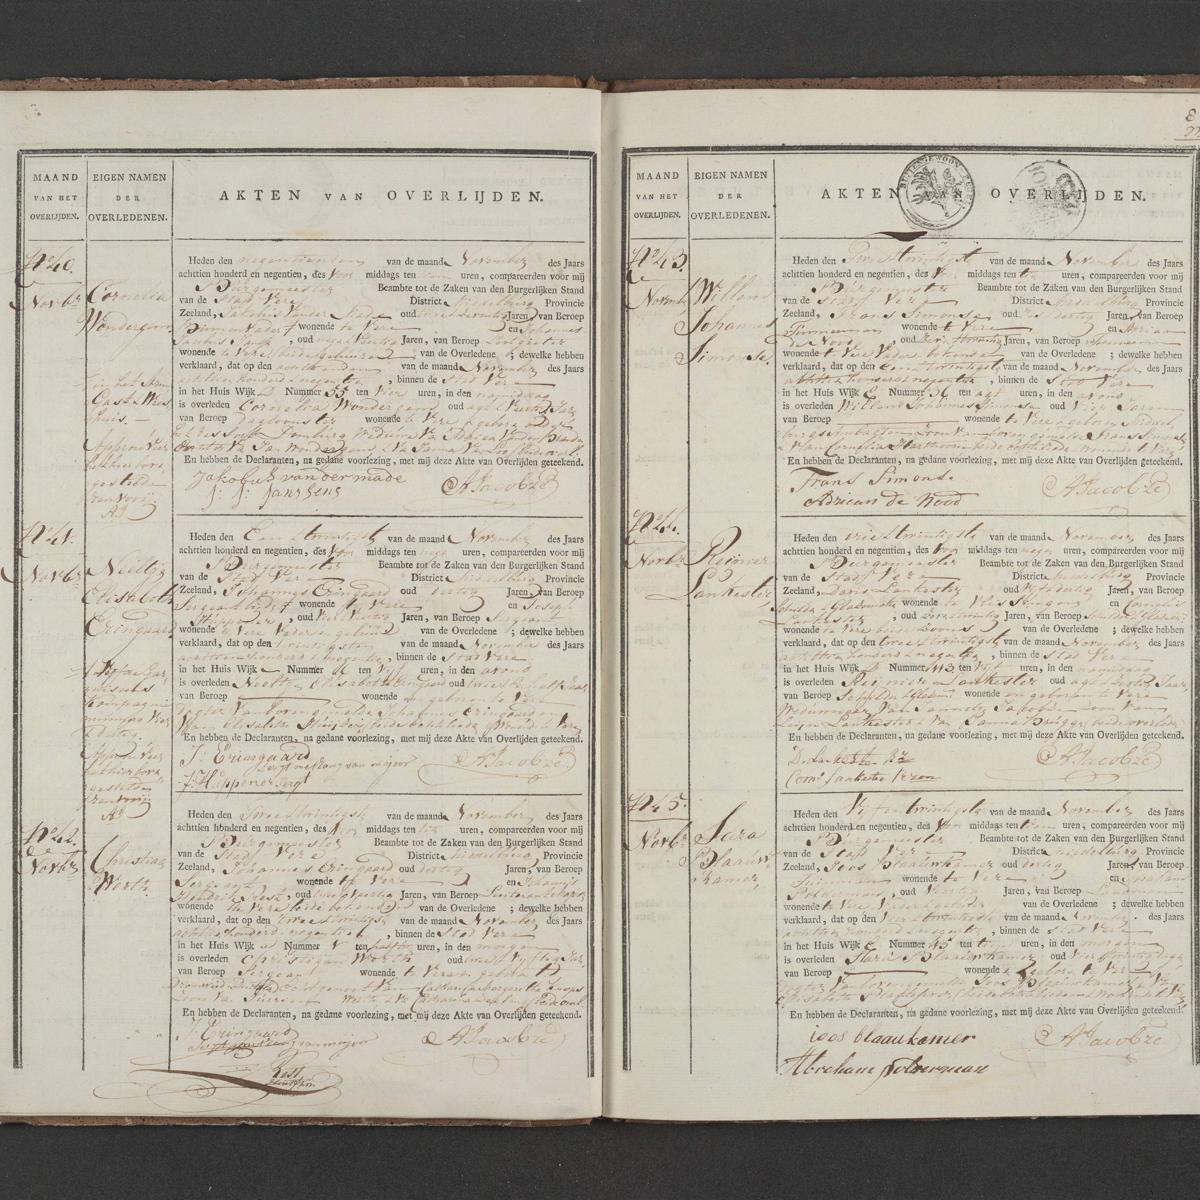 Civil registry of deaths, Veere, 1819, records 40-45